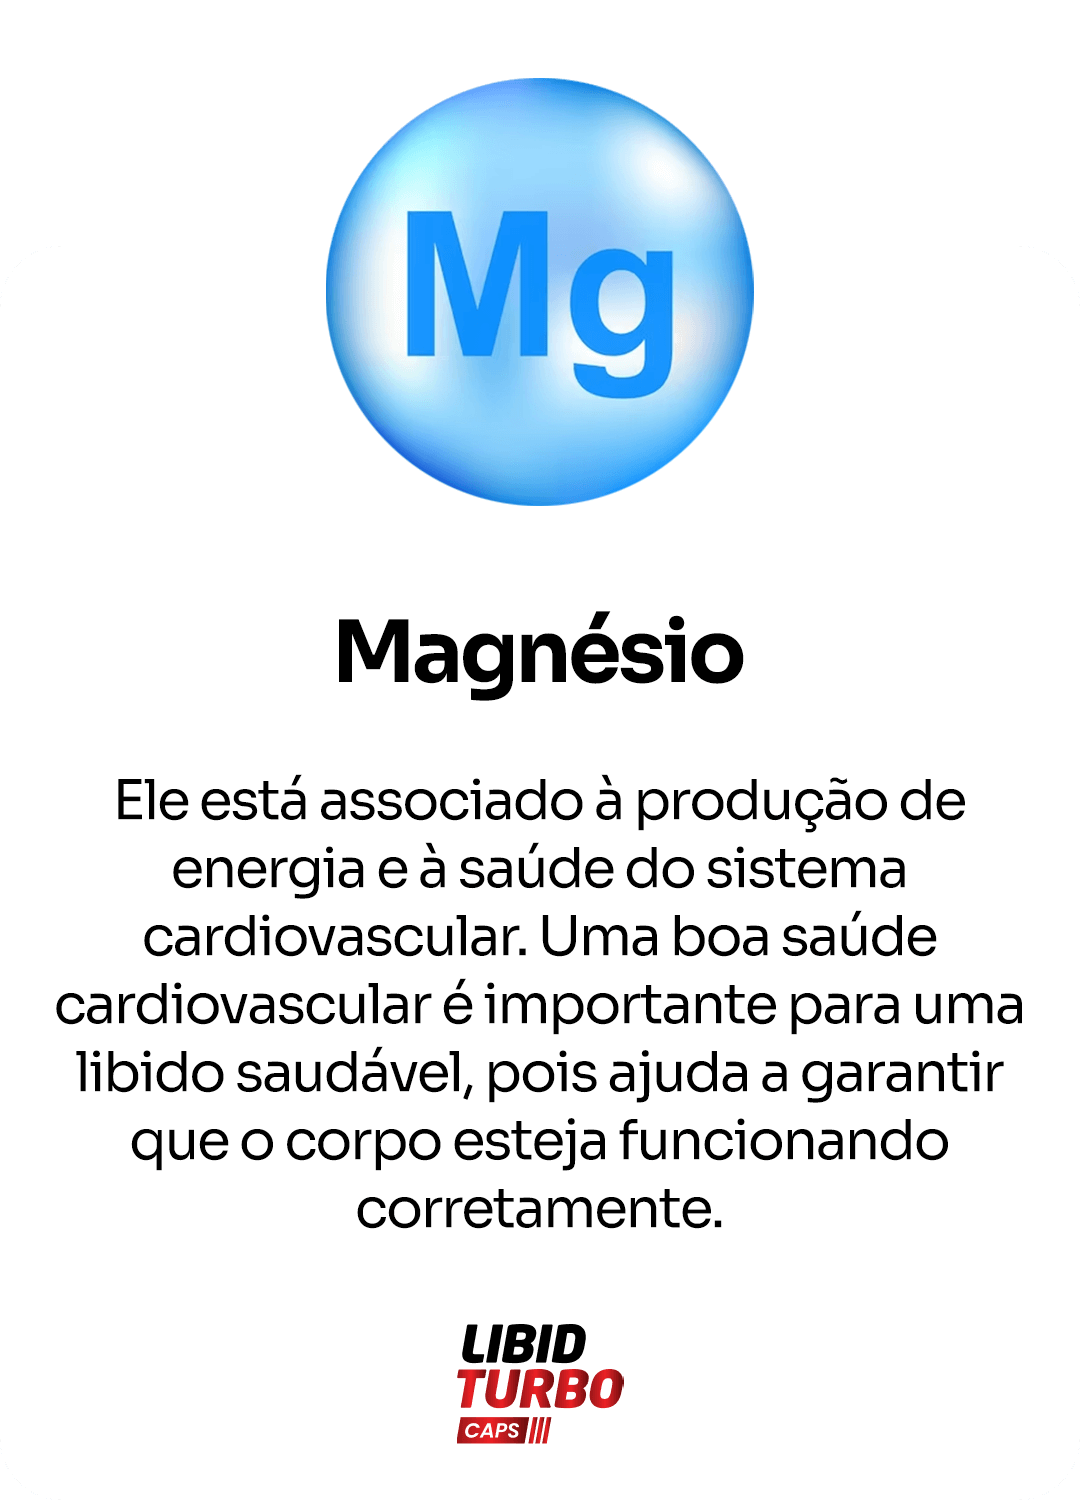 Magnésio